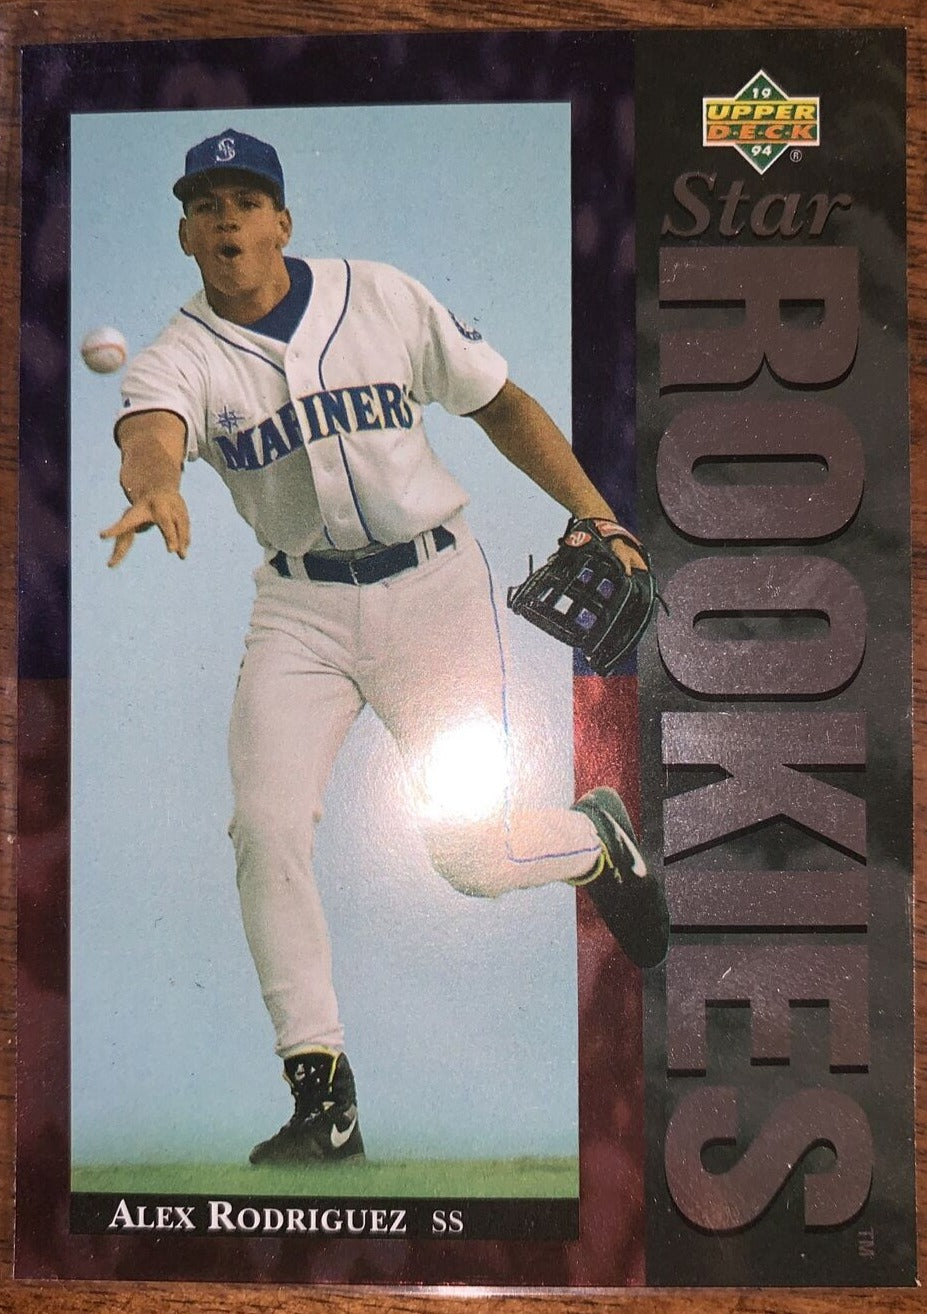 Alex Rodriguez 1994 Upper Deck Star Rookie Series Mint ROOKIE Card #24